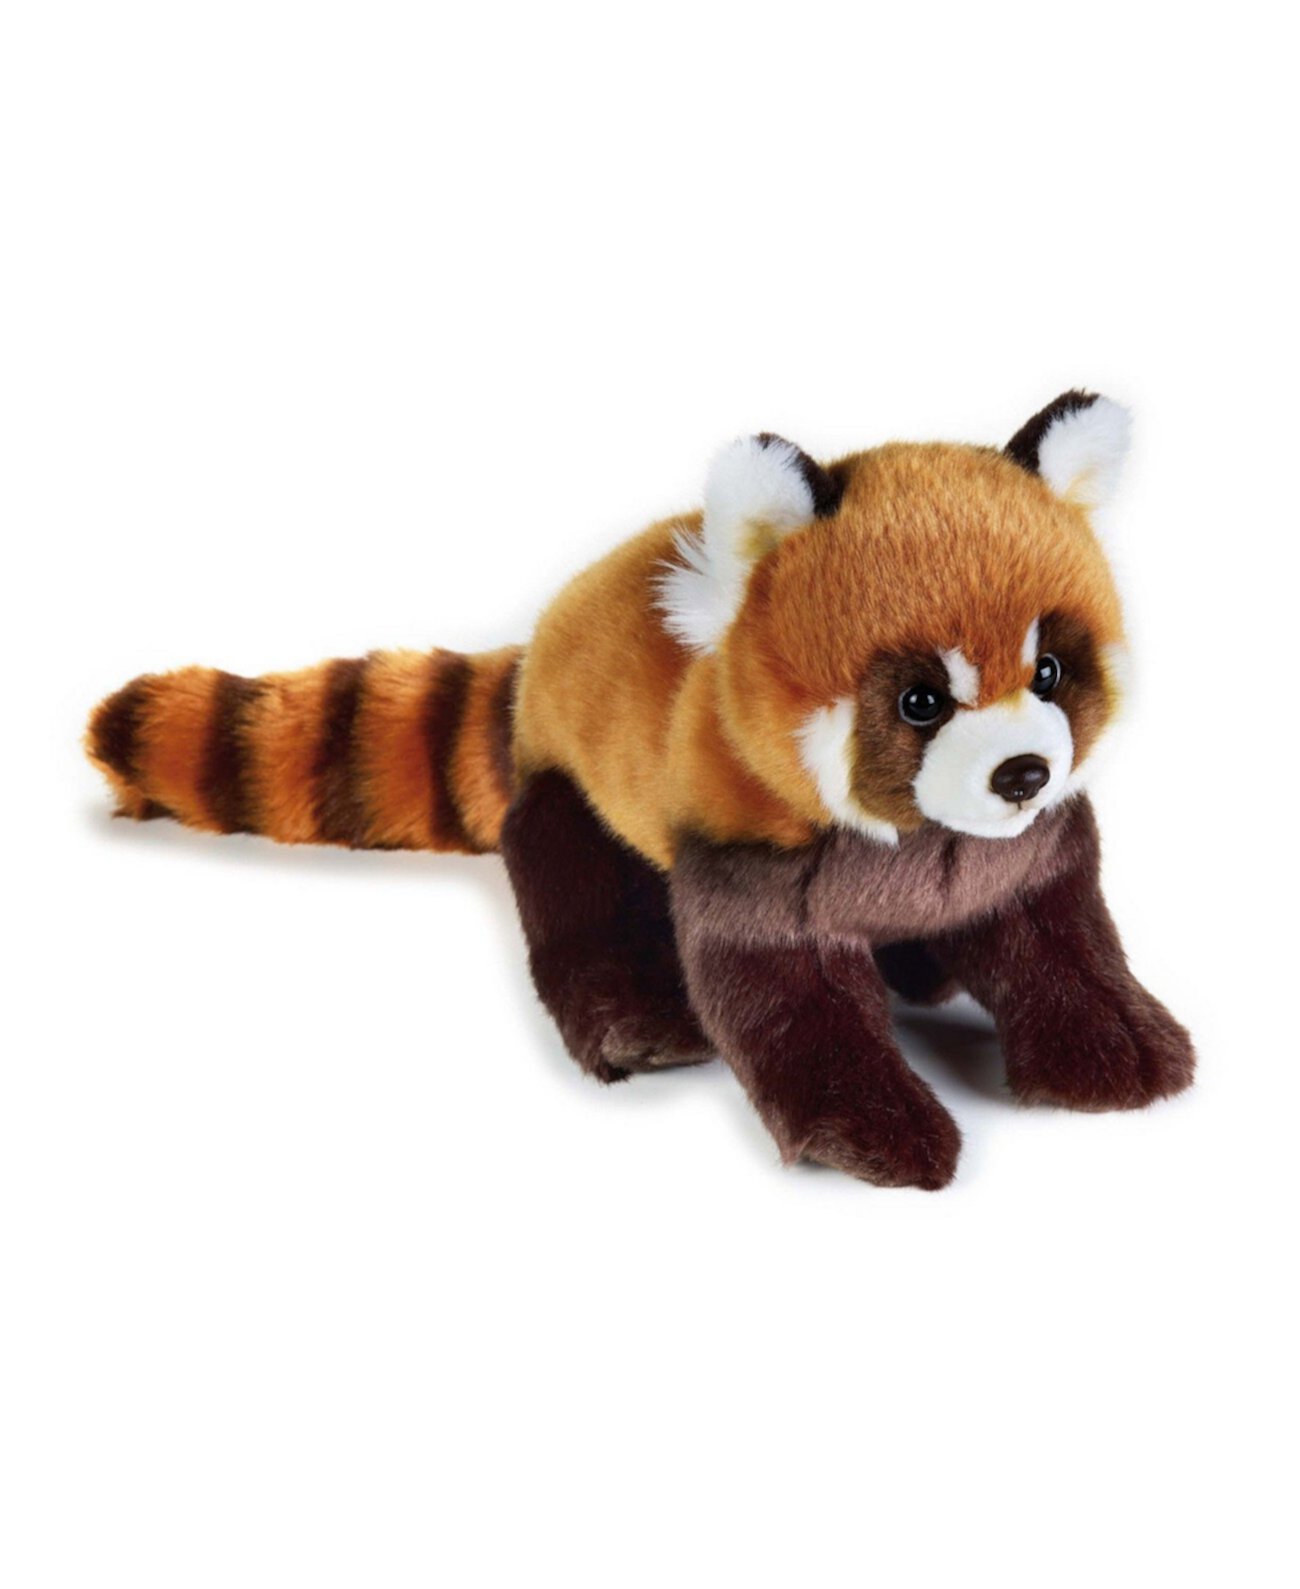 Мягкие игрушки животных купить. Игрушки National Geographic Панда. Red Panda игрушка. Плюшевая малая Панда. Глазастик красная Панда игрушка.